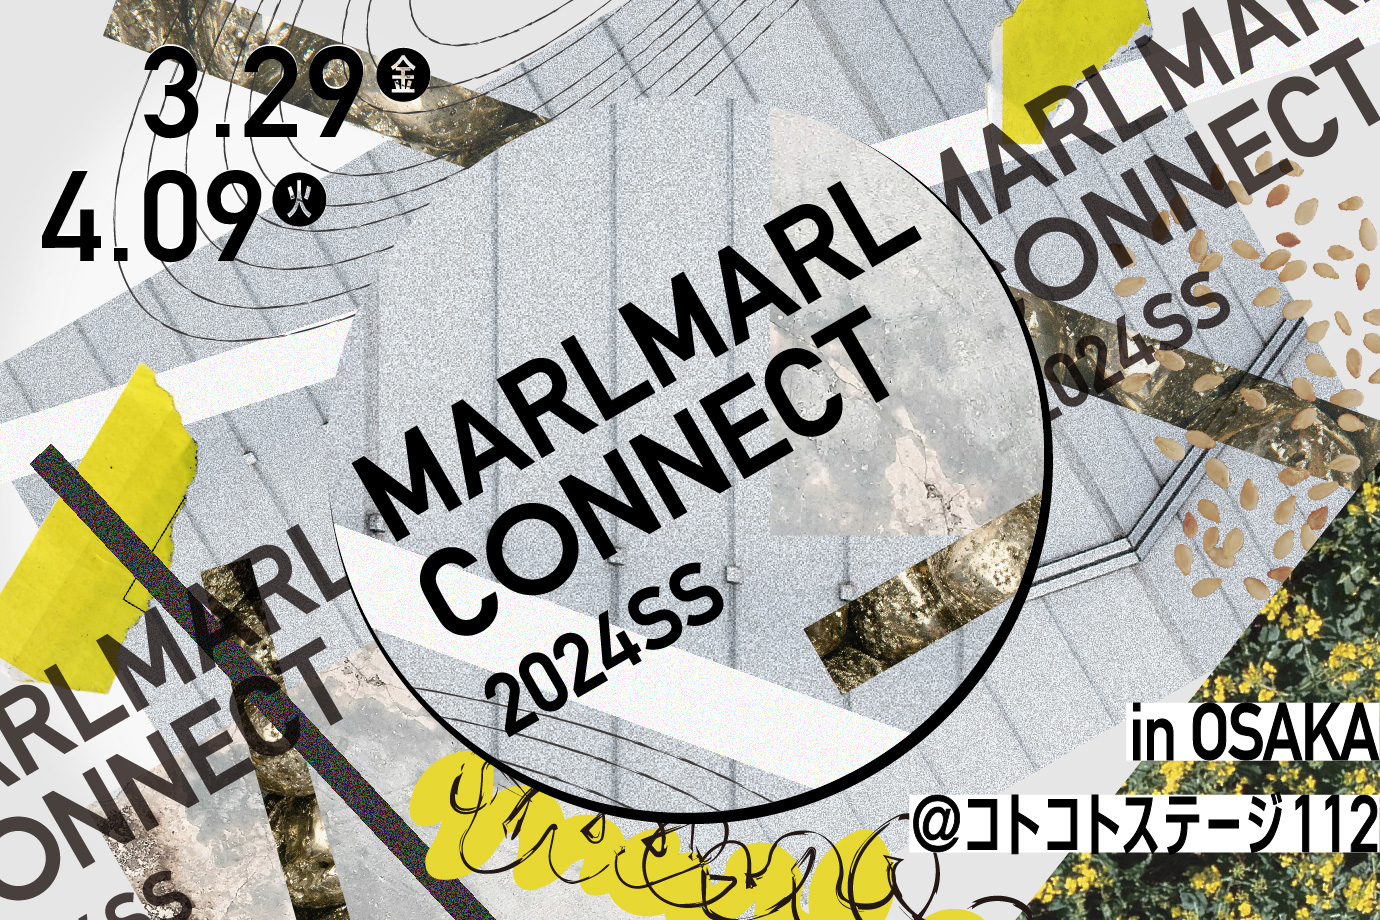 【3/29〜 4/9】MARLMARL CONNECT in OSAKA 開催